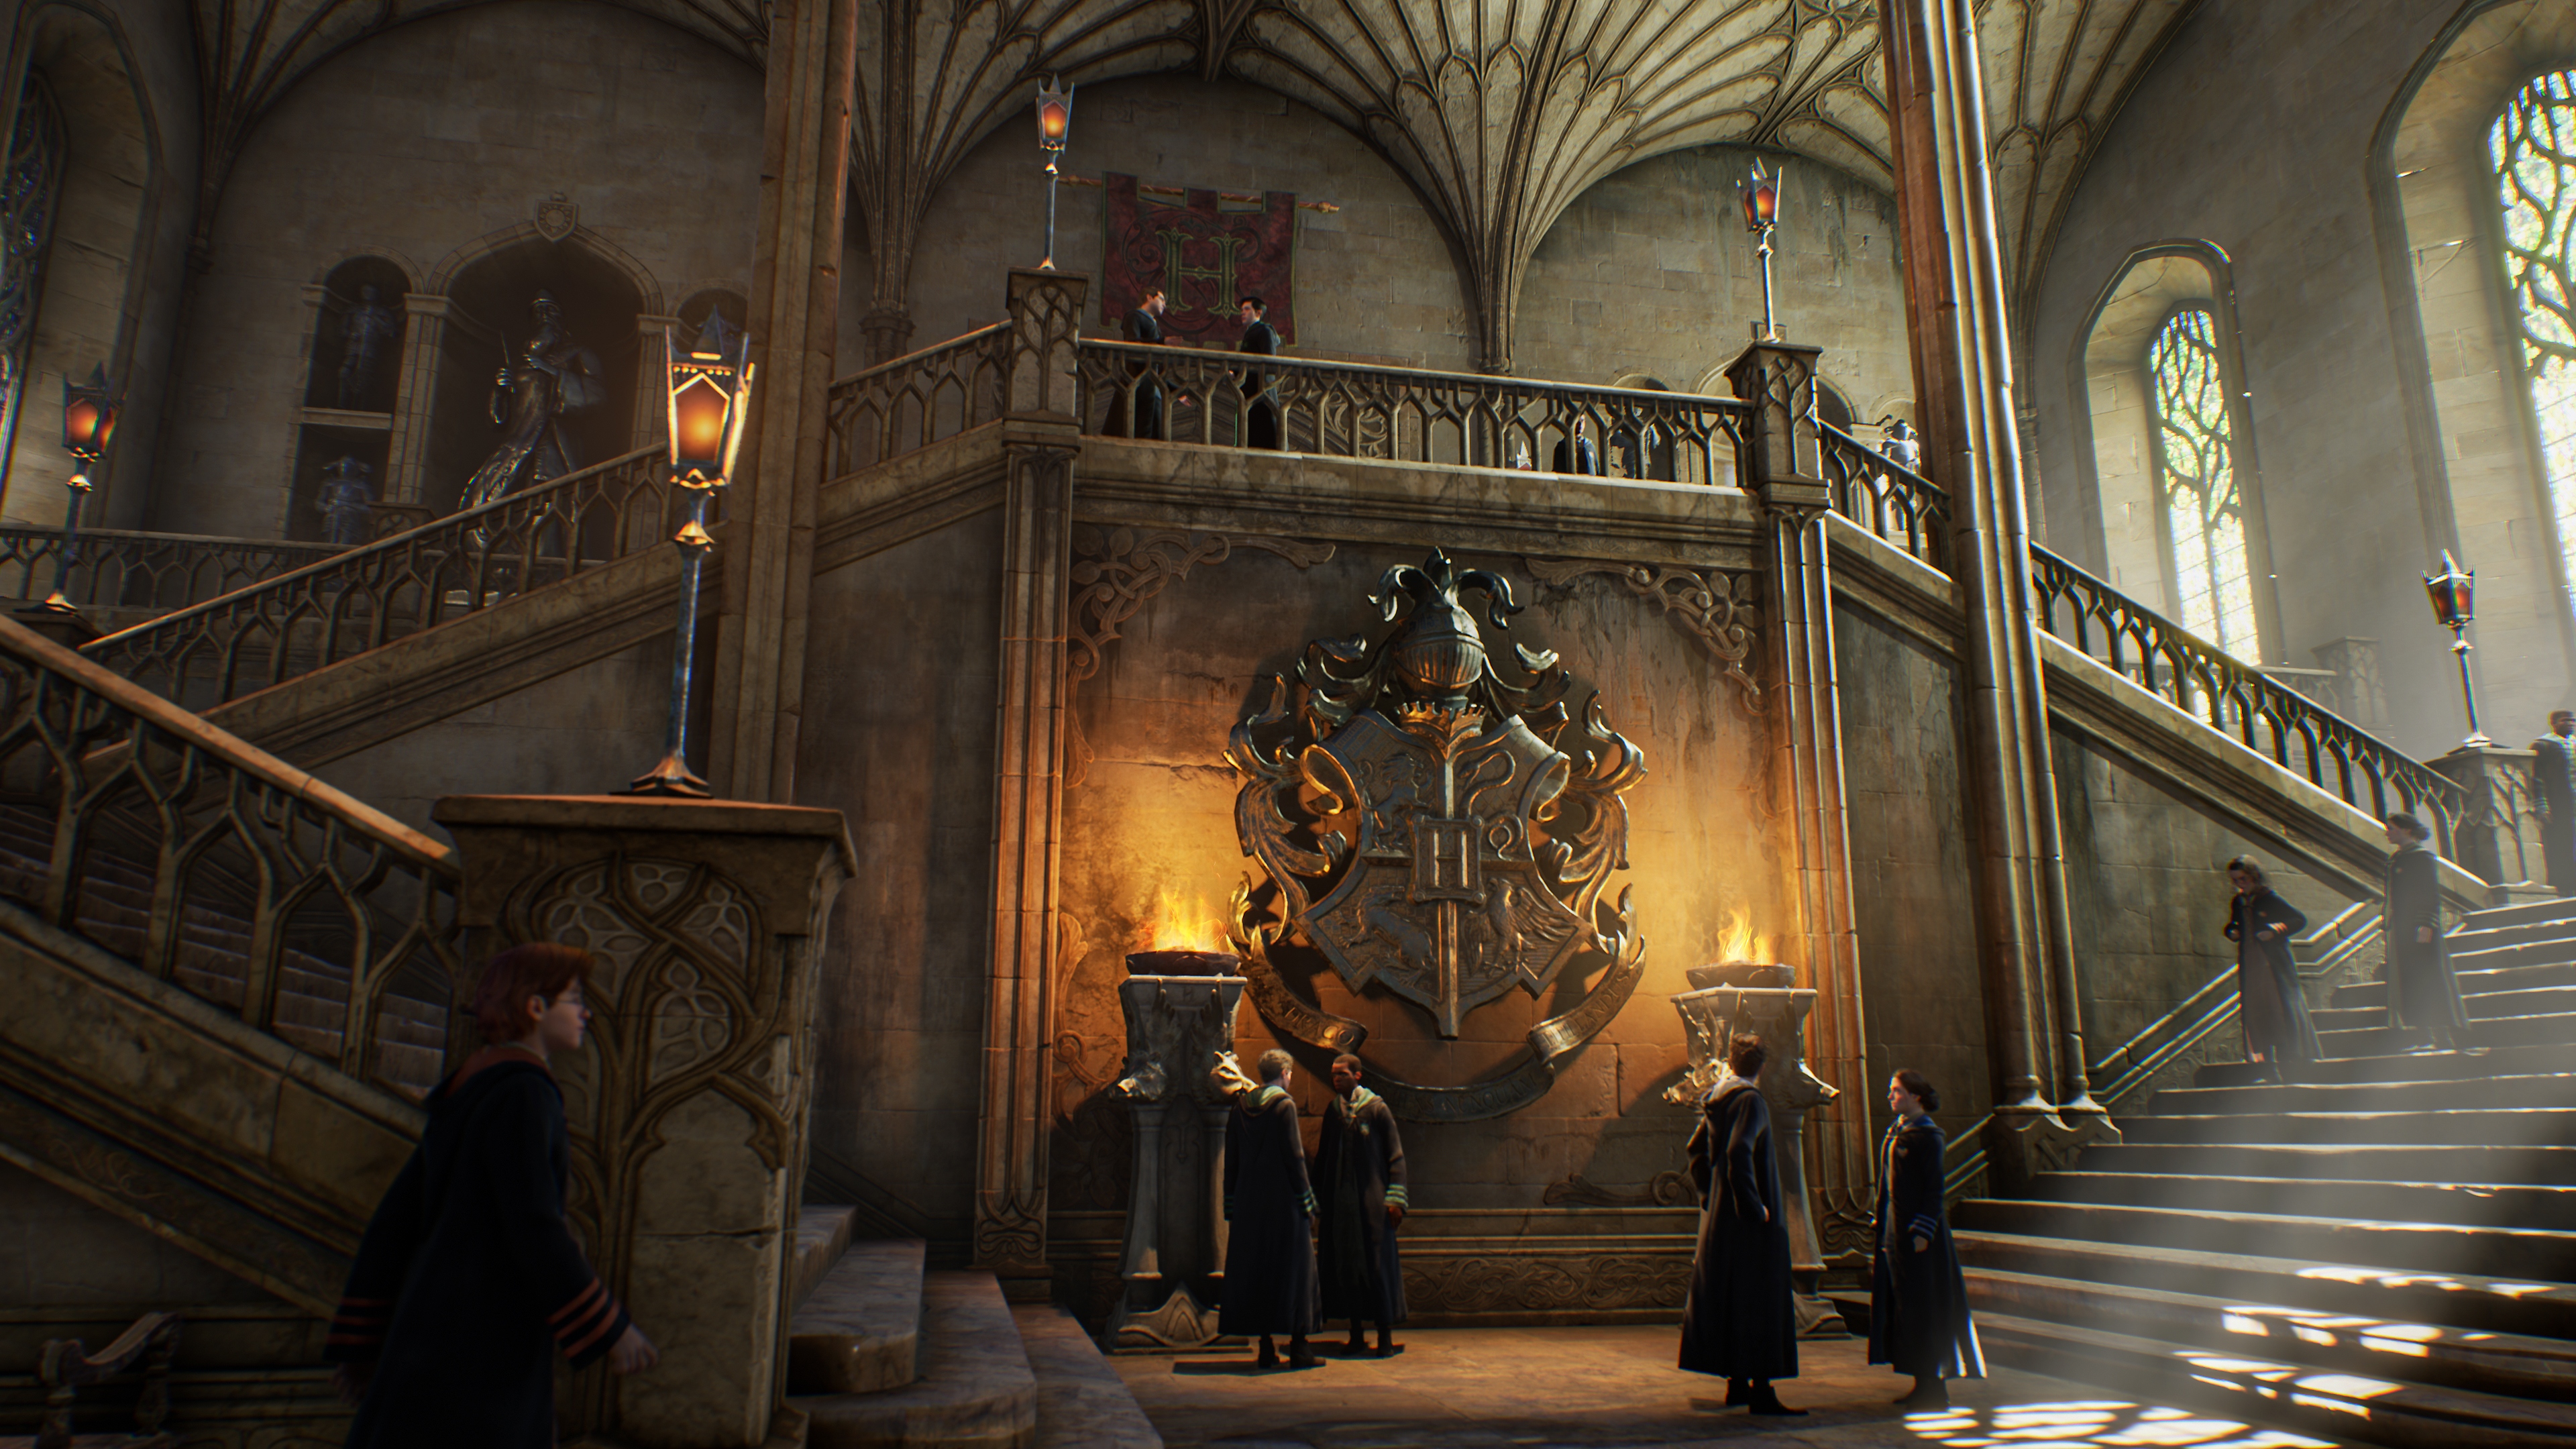 Captura de pantalla de Hogwarts Legacy que muestra unas escaleras del interior de Hogwarts